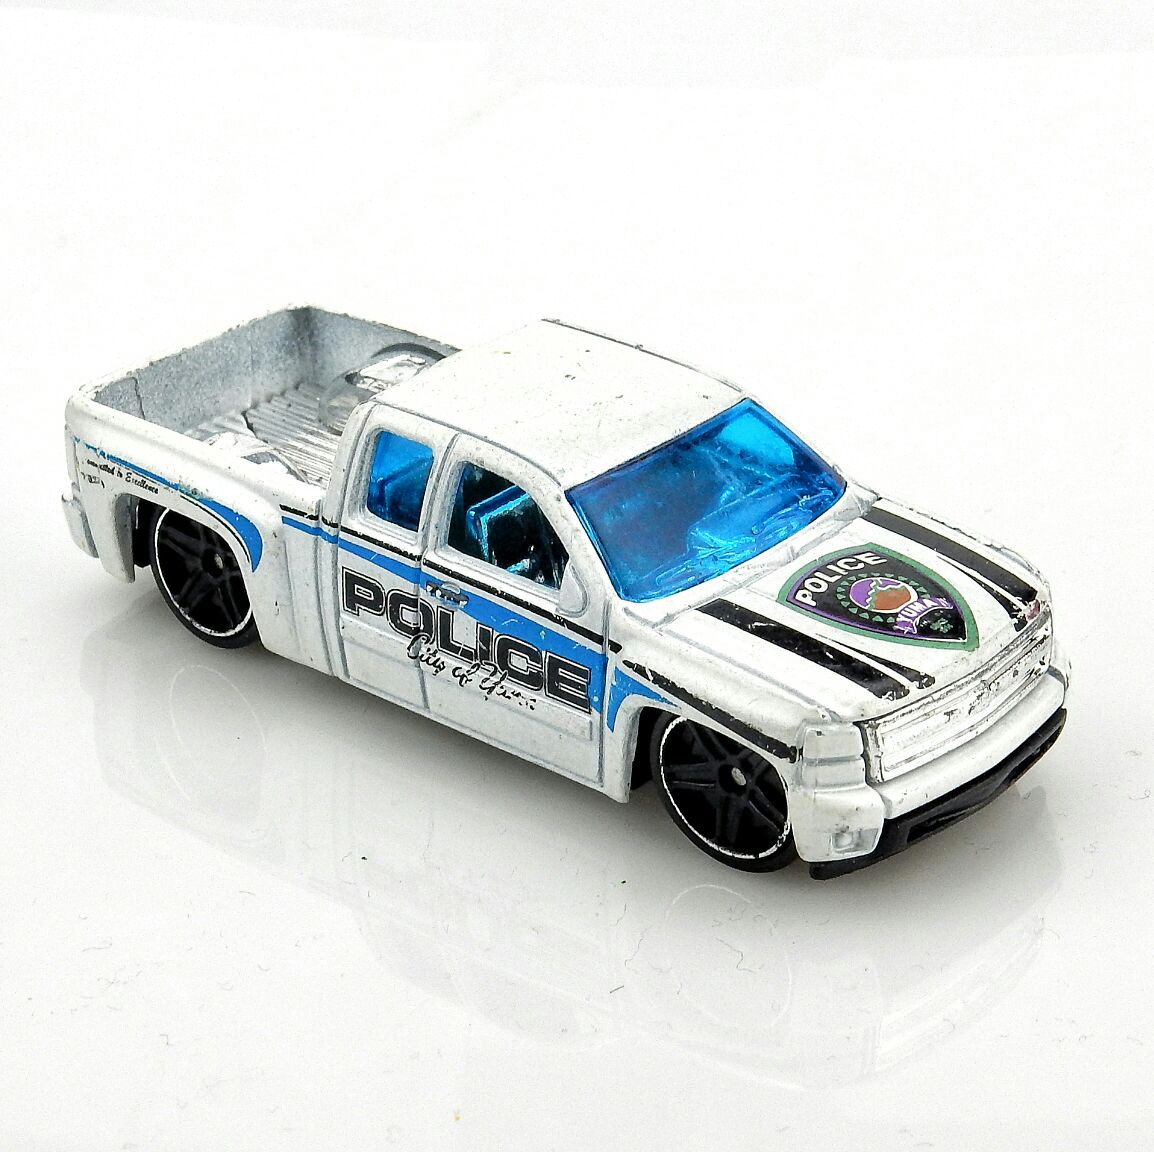 Chevy Silverado (HW) - HW Main Street 2012 toy car collectible - Main Image 1